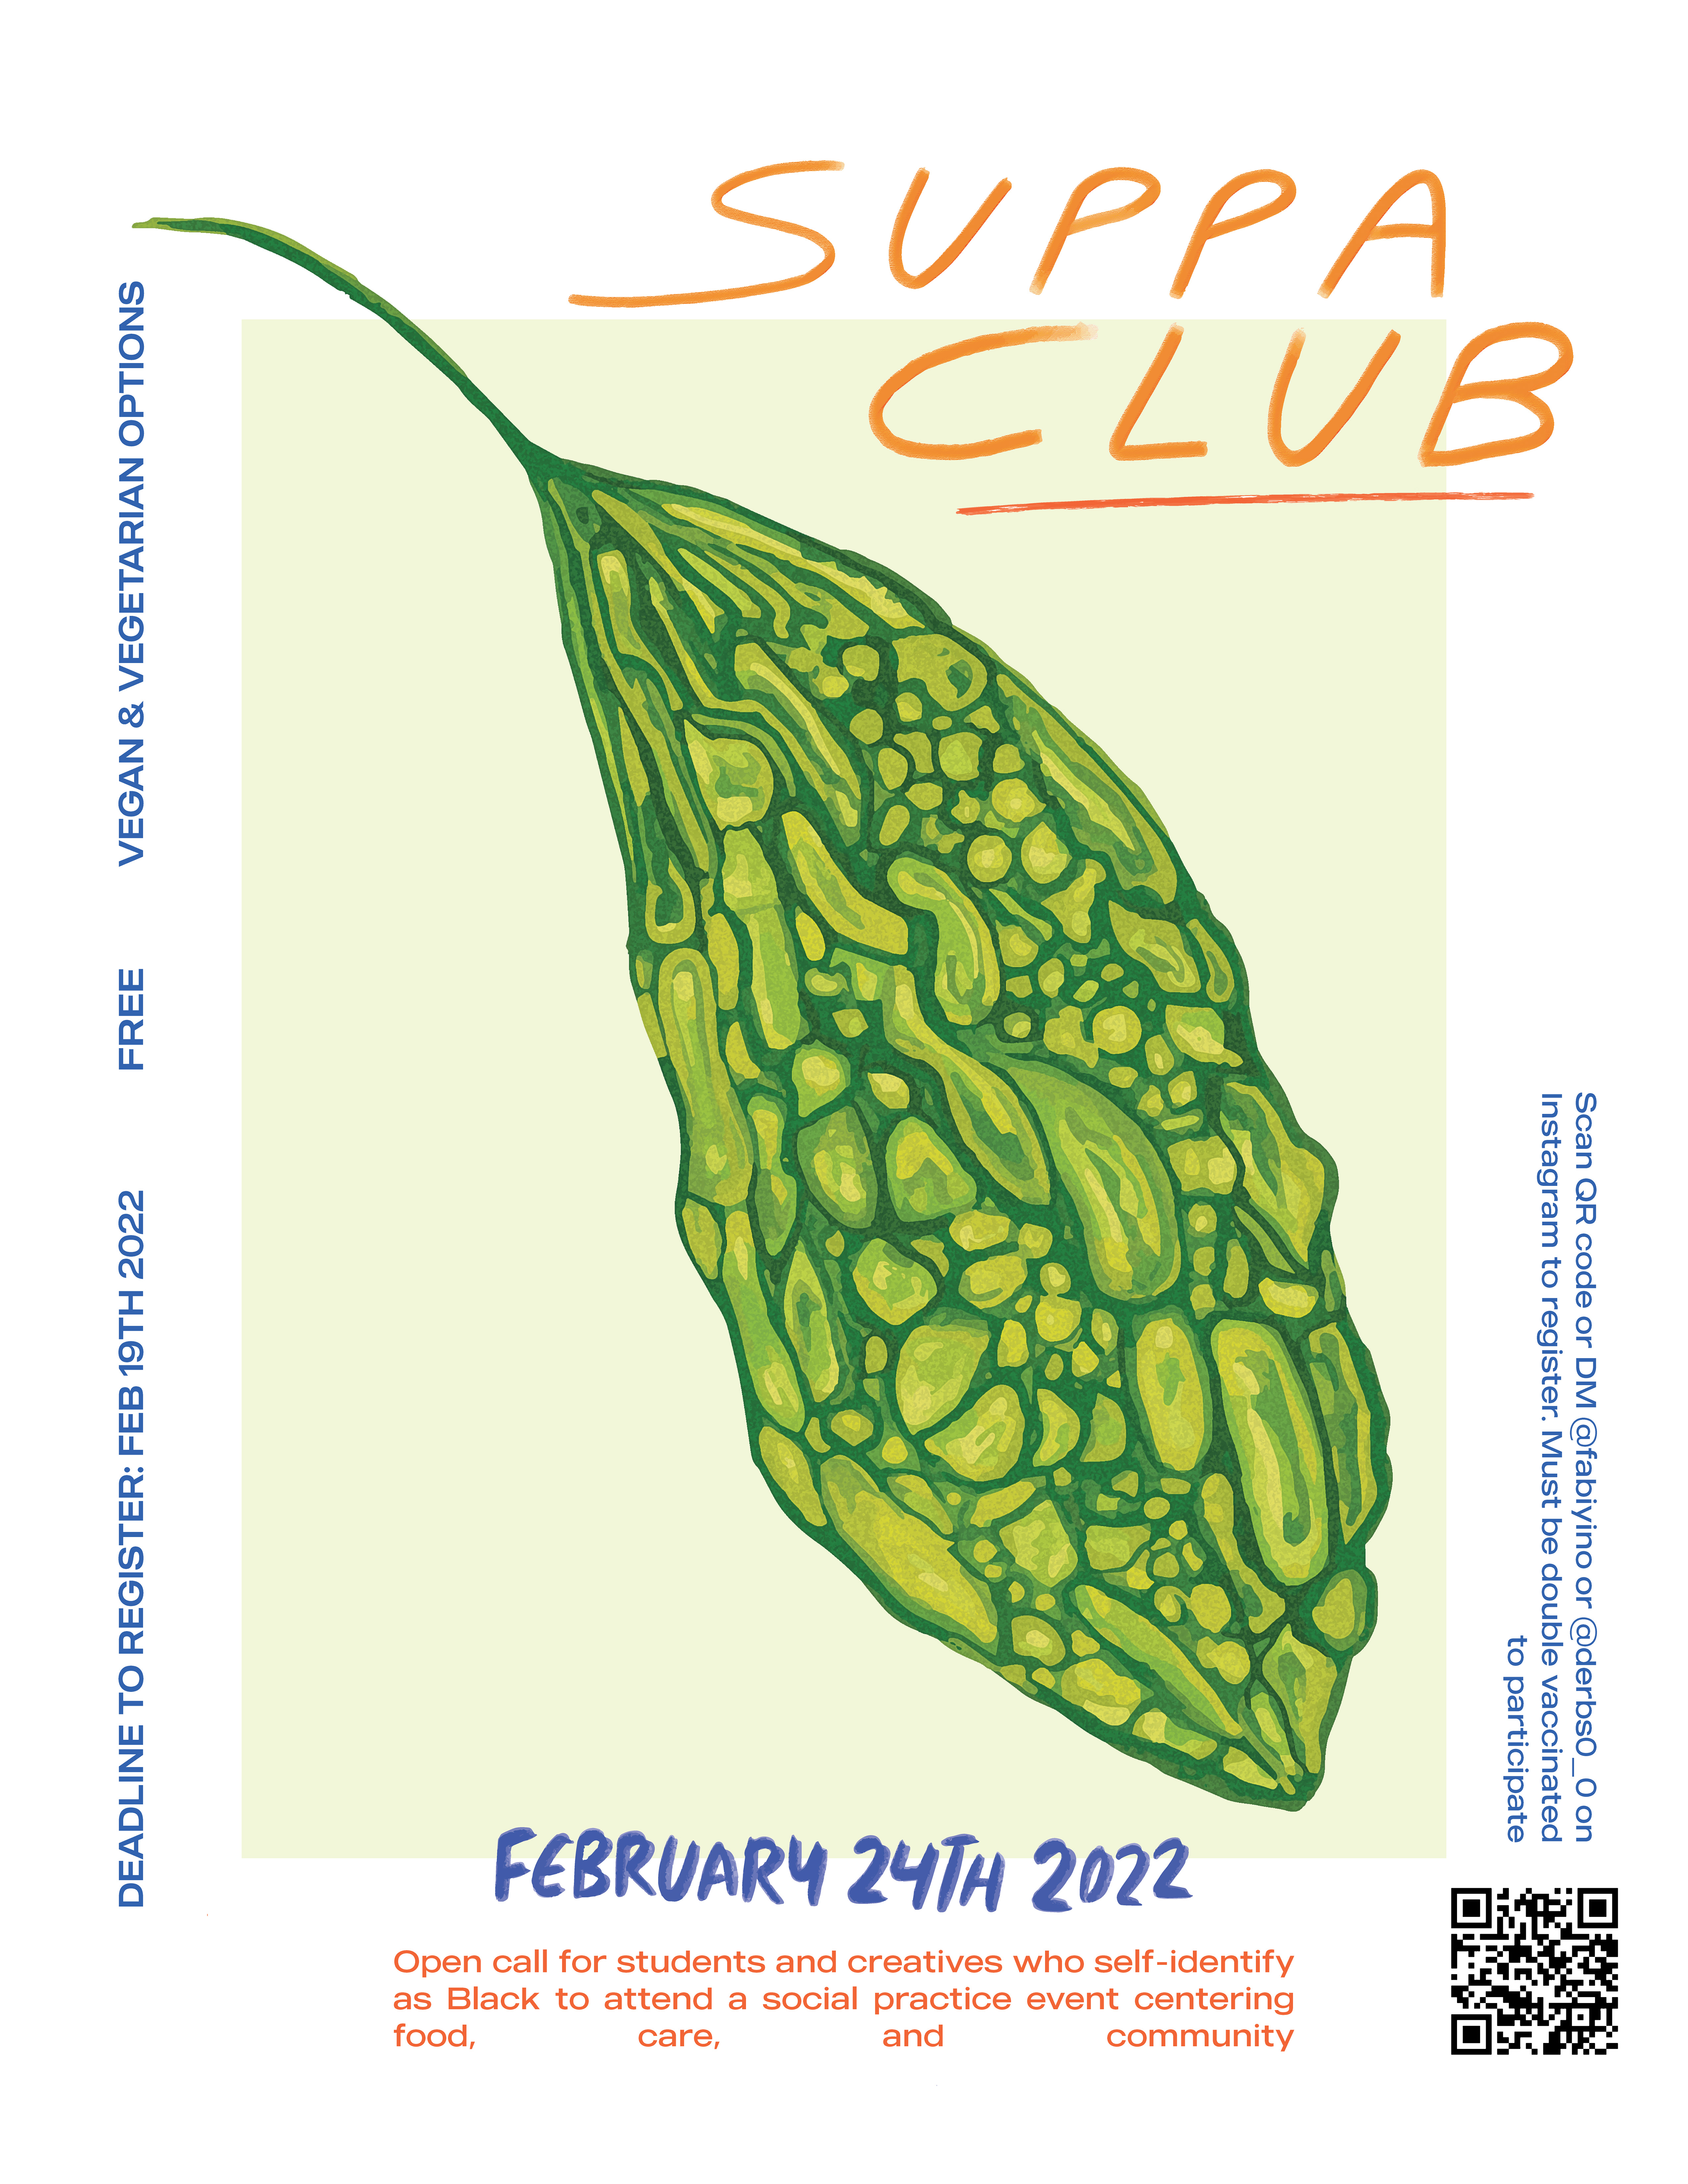 Suppa Club menus and poster